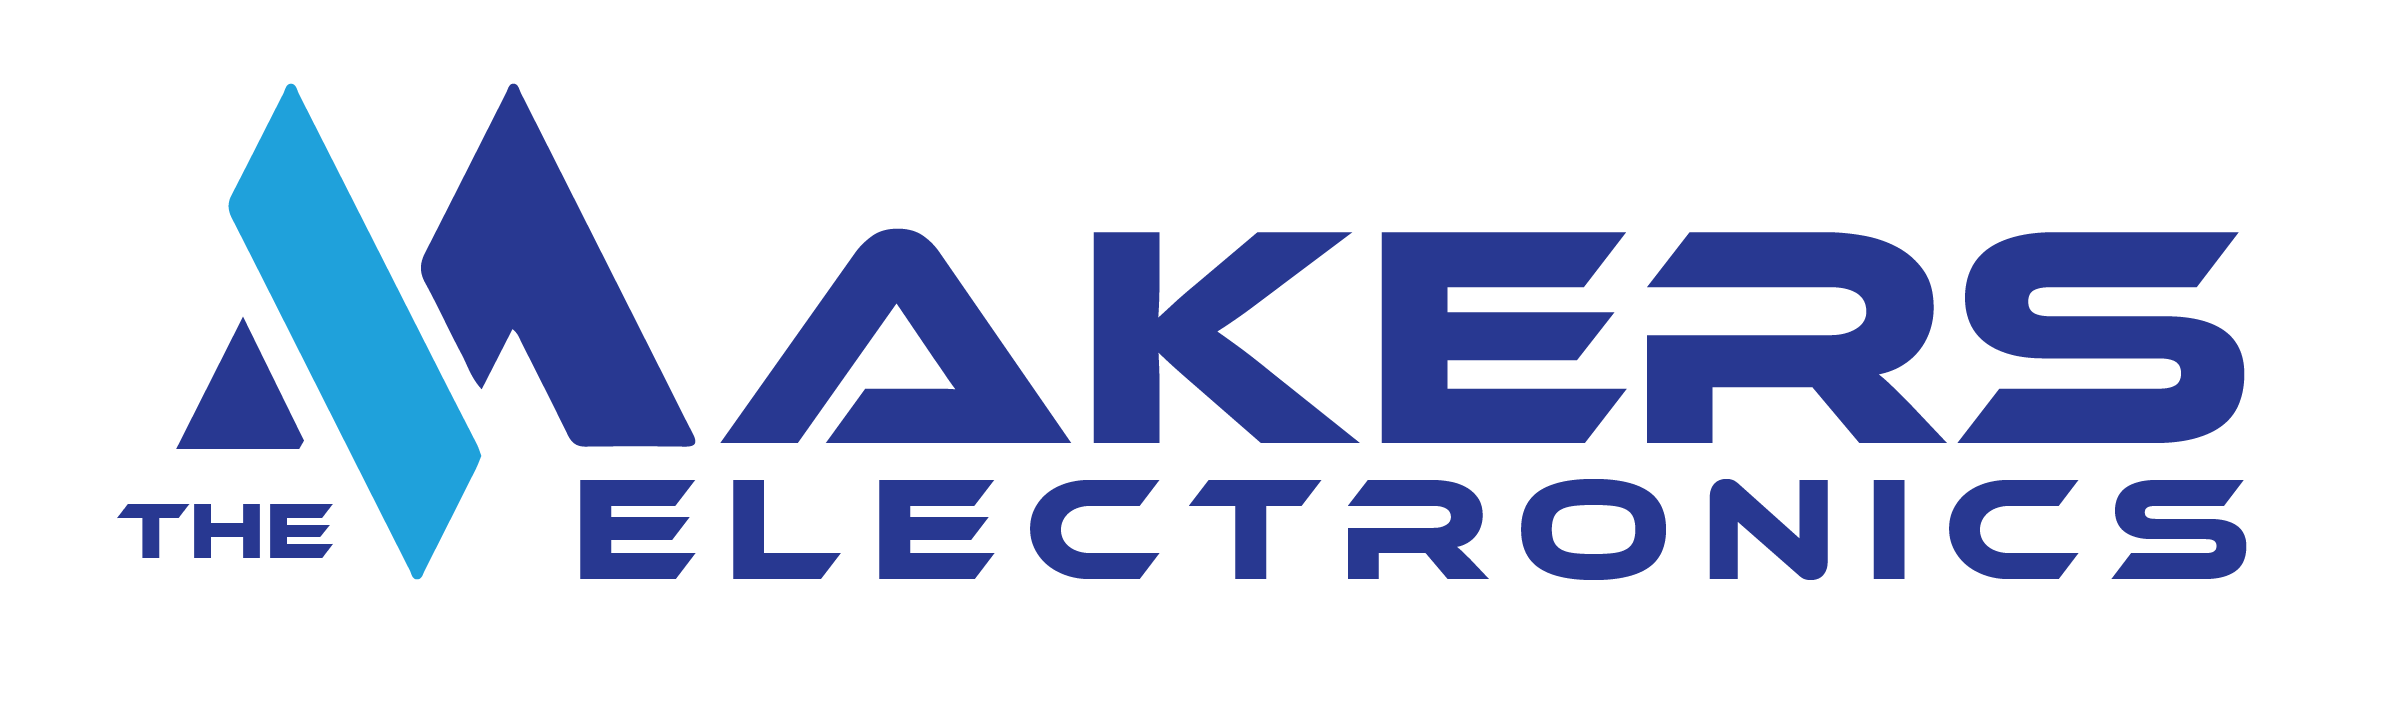 The Makers Electronics Co. Ltd.